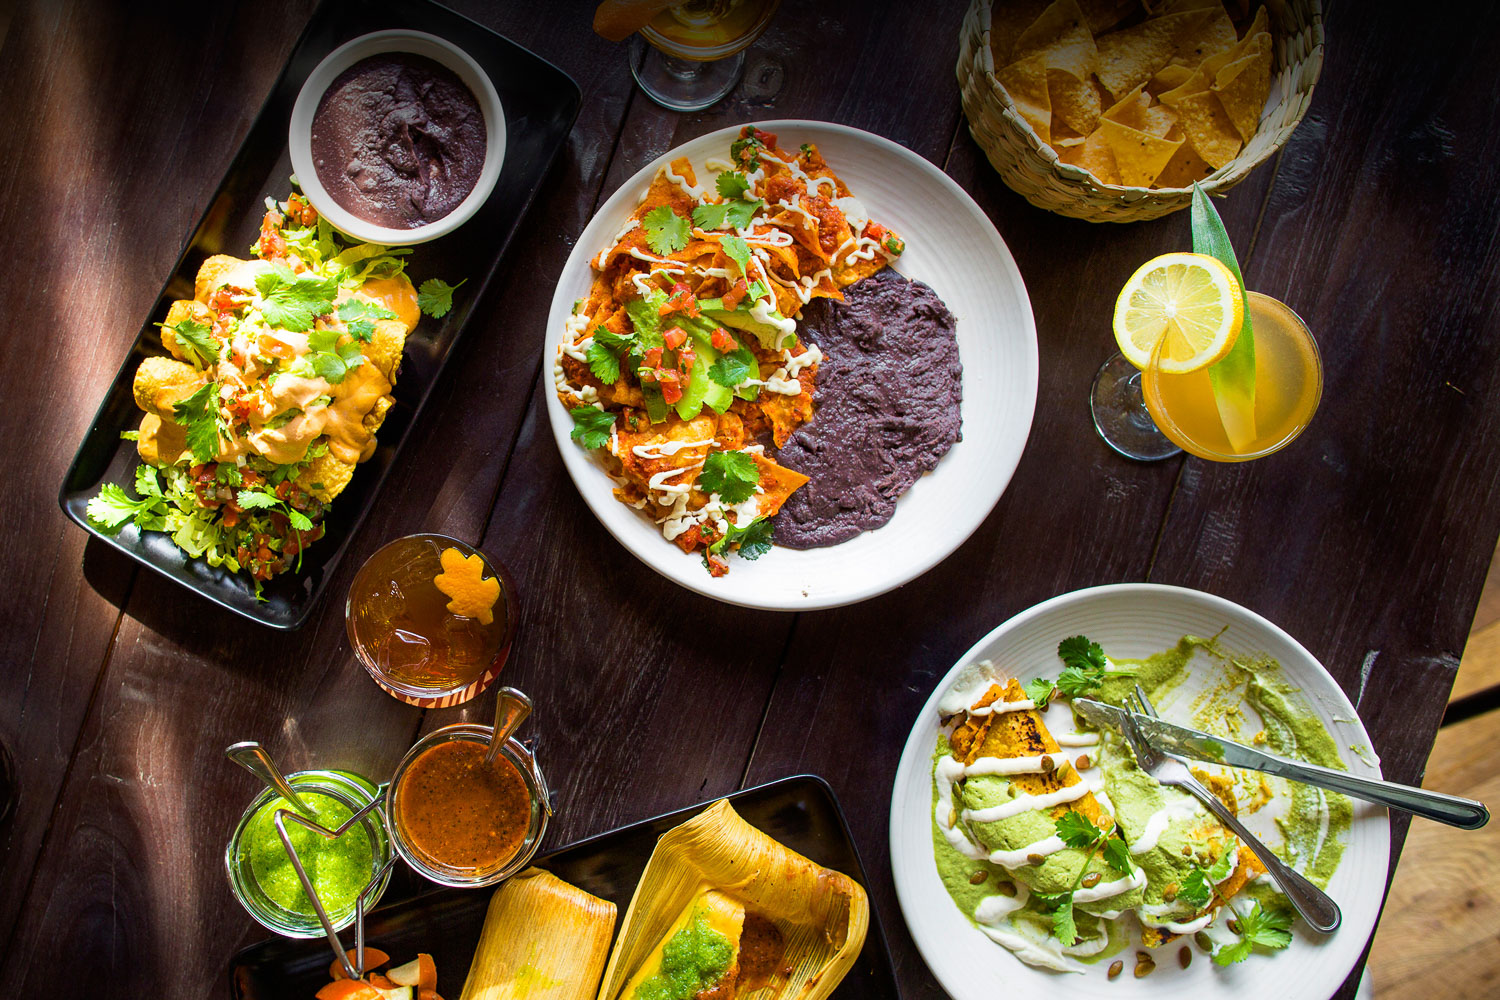 A delicious spread at Gracias Madre in San Francisco, a vegan Mexican restaurant